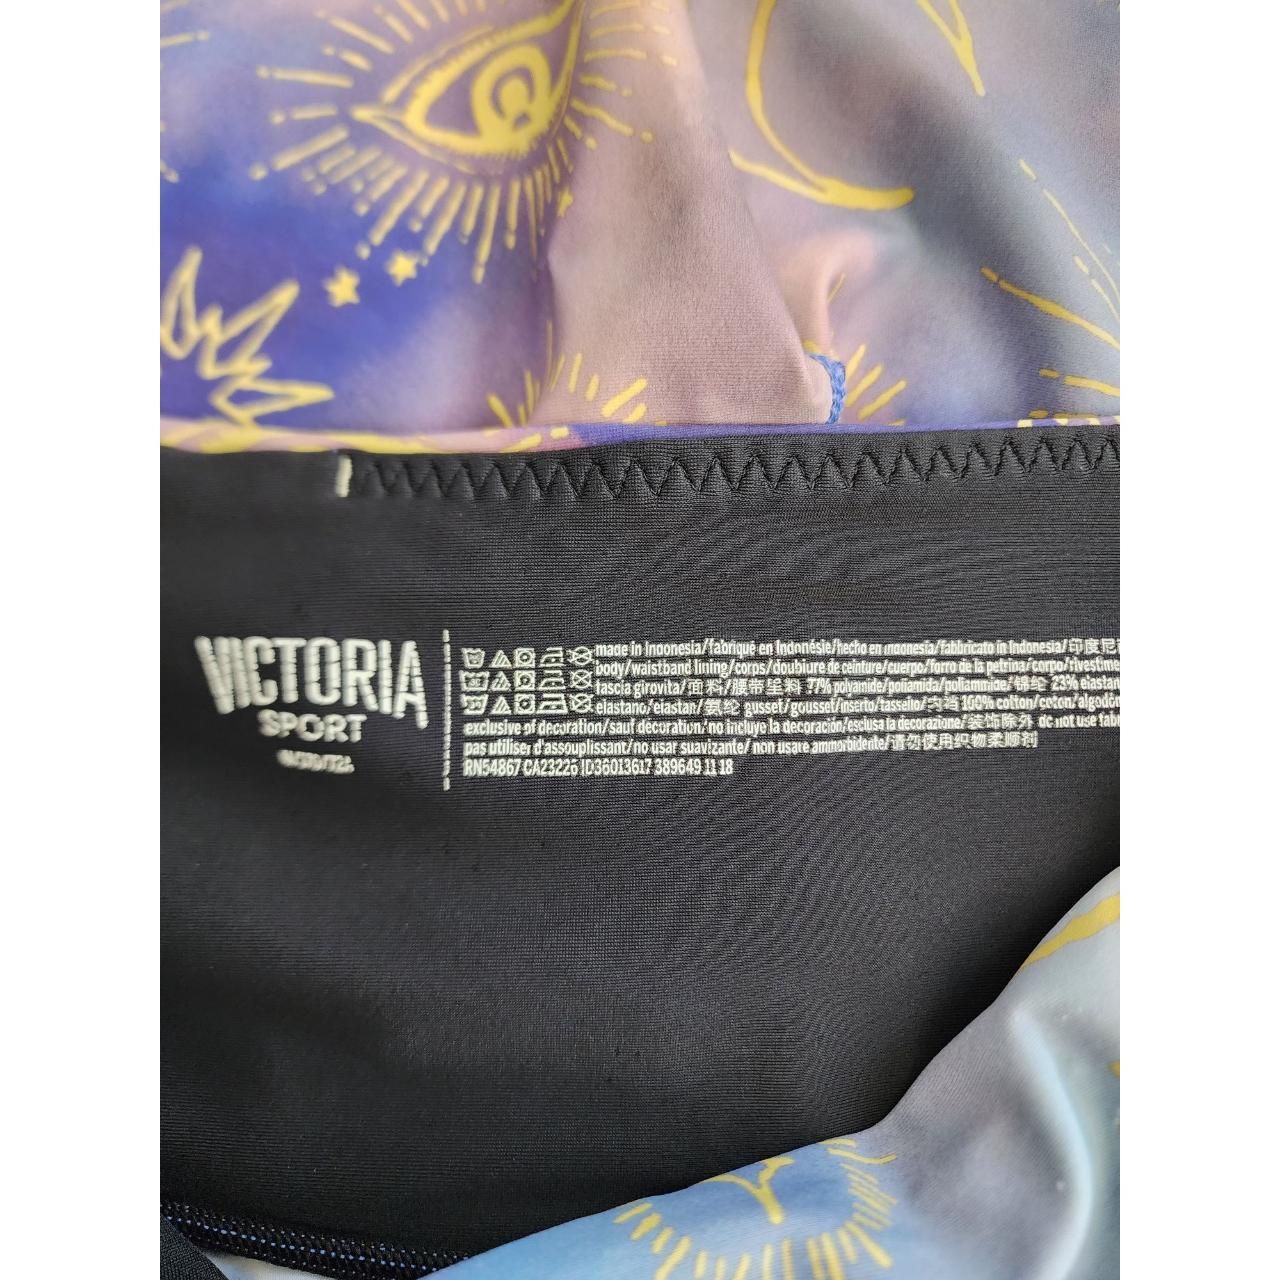 Victoria Sport Victoria's Secret Mystical Shine - Depop